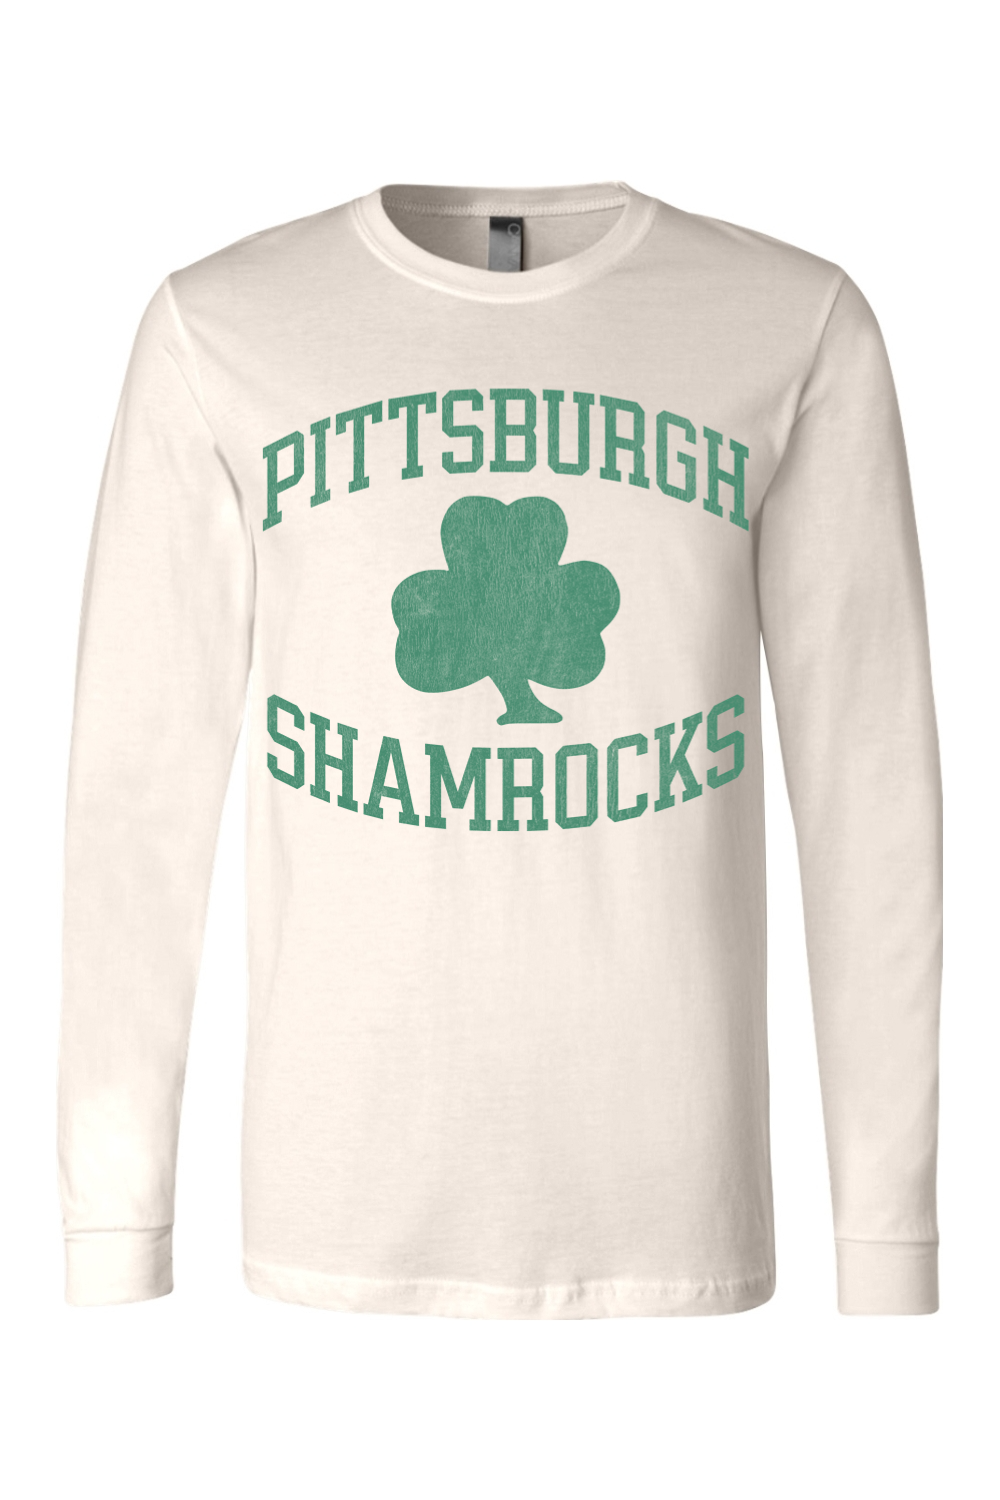 Pittsburgh Shamrocks Hockey - Long Sleeve Tee - Yinzylvania